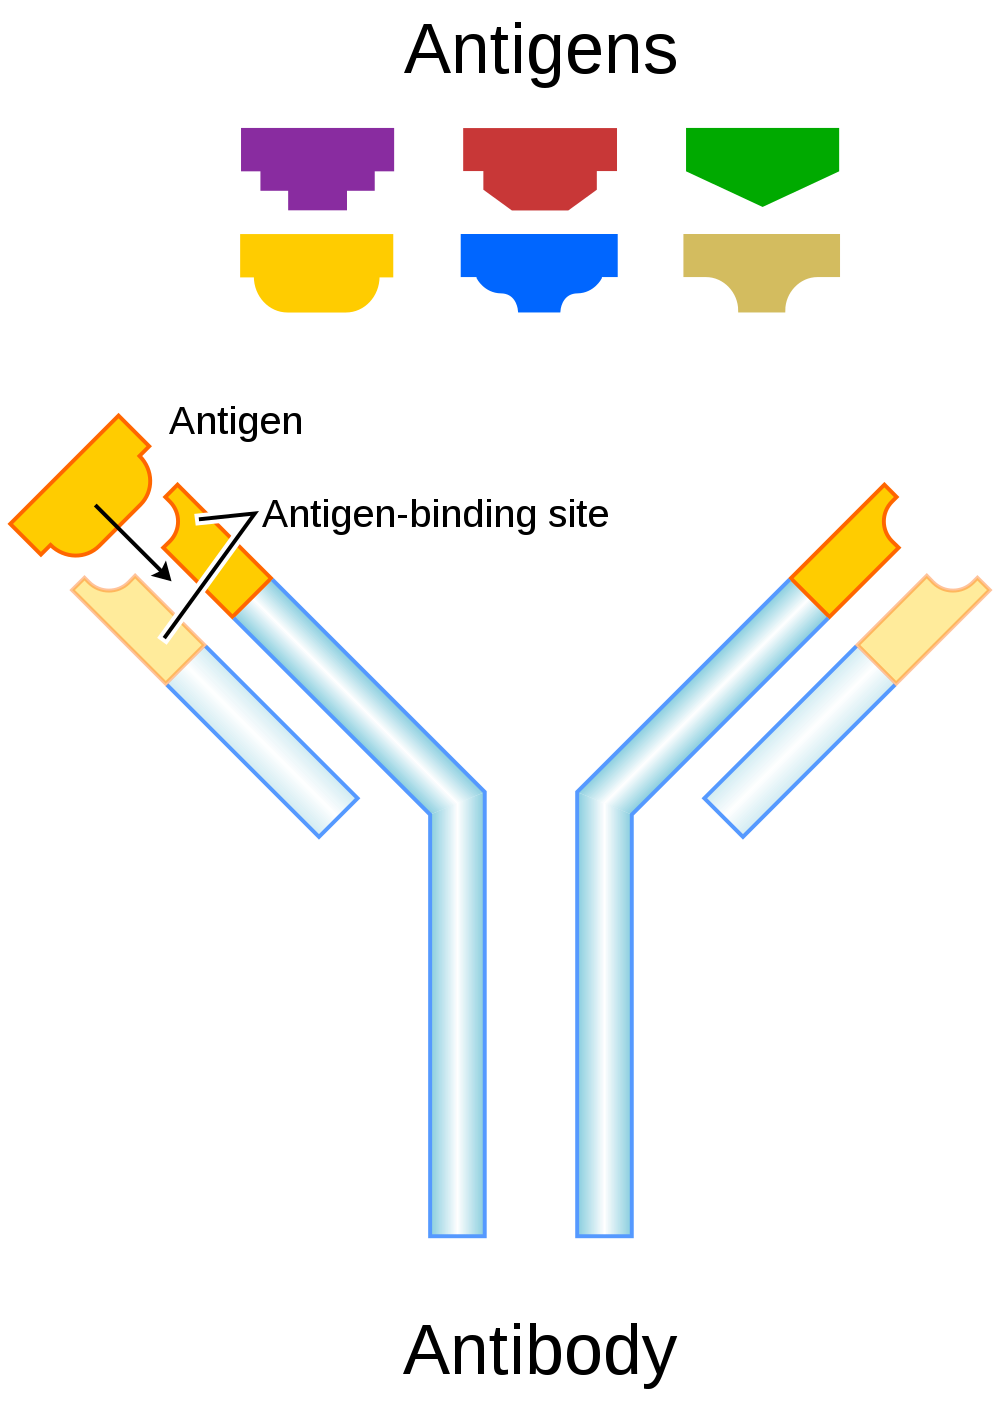 17.5.5 Antibodies match the shape of the antigen